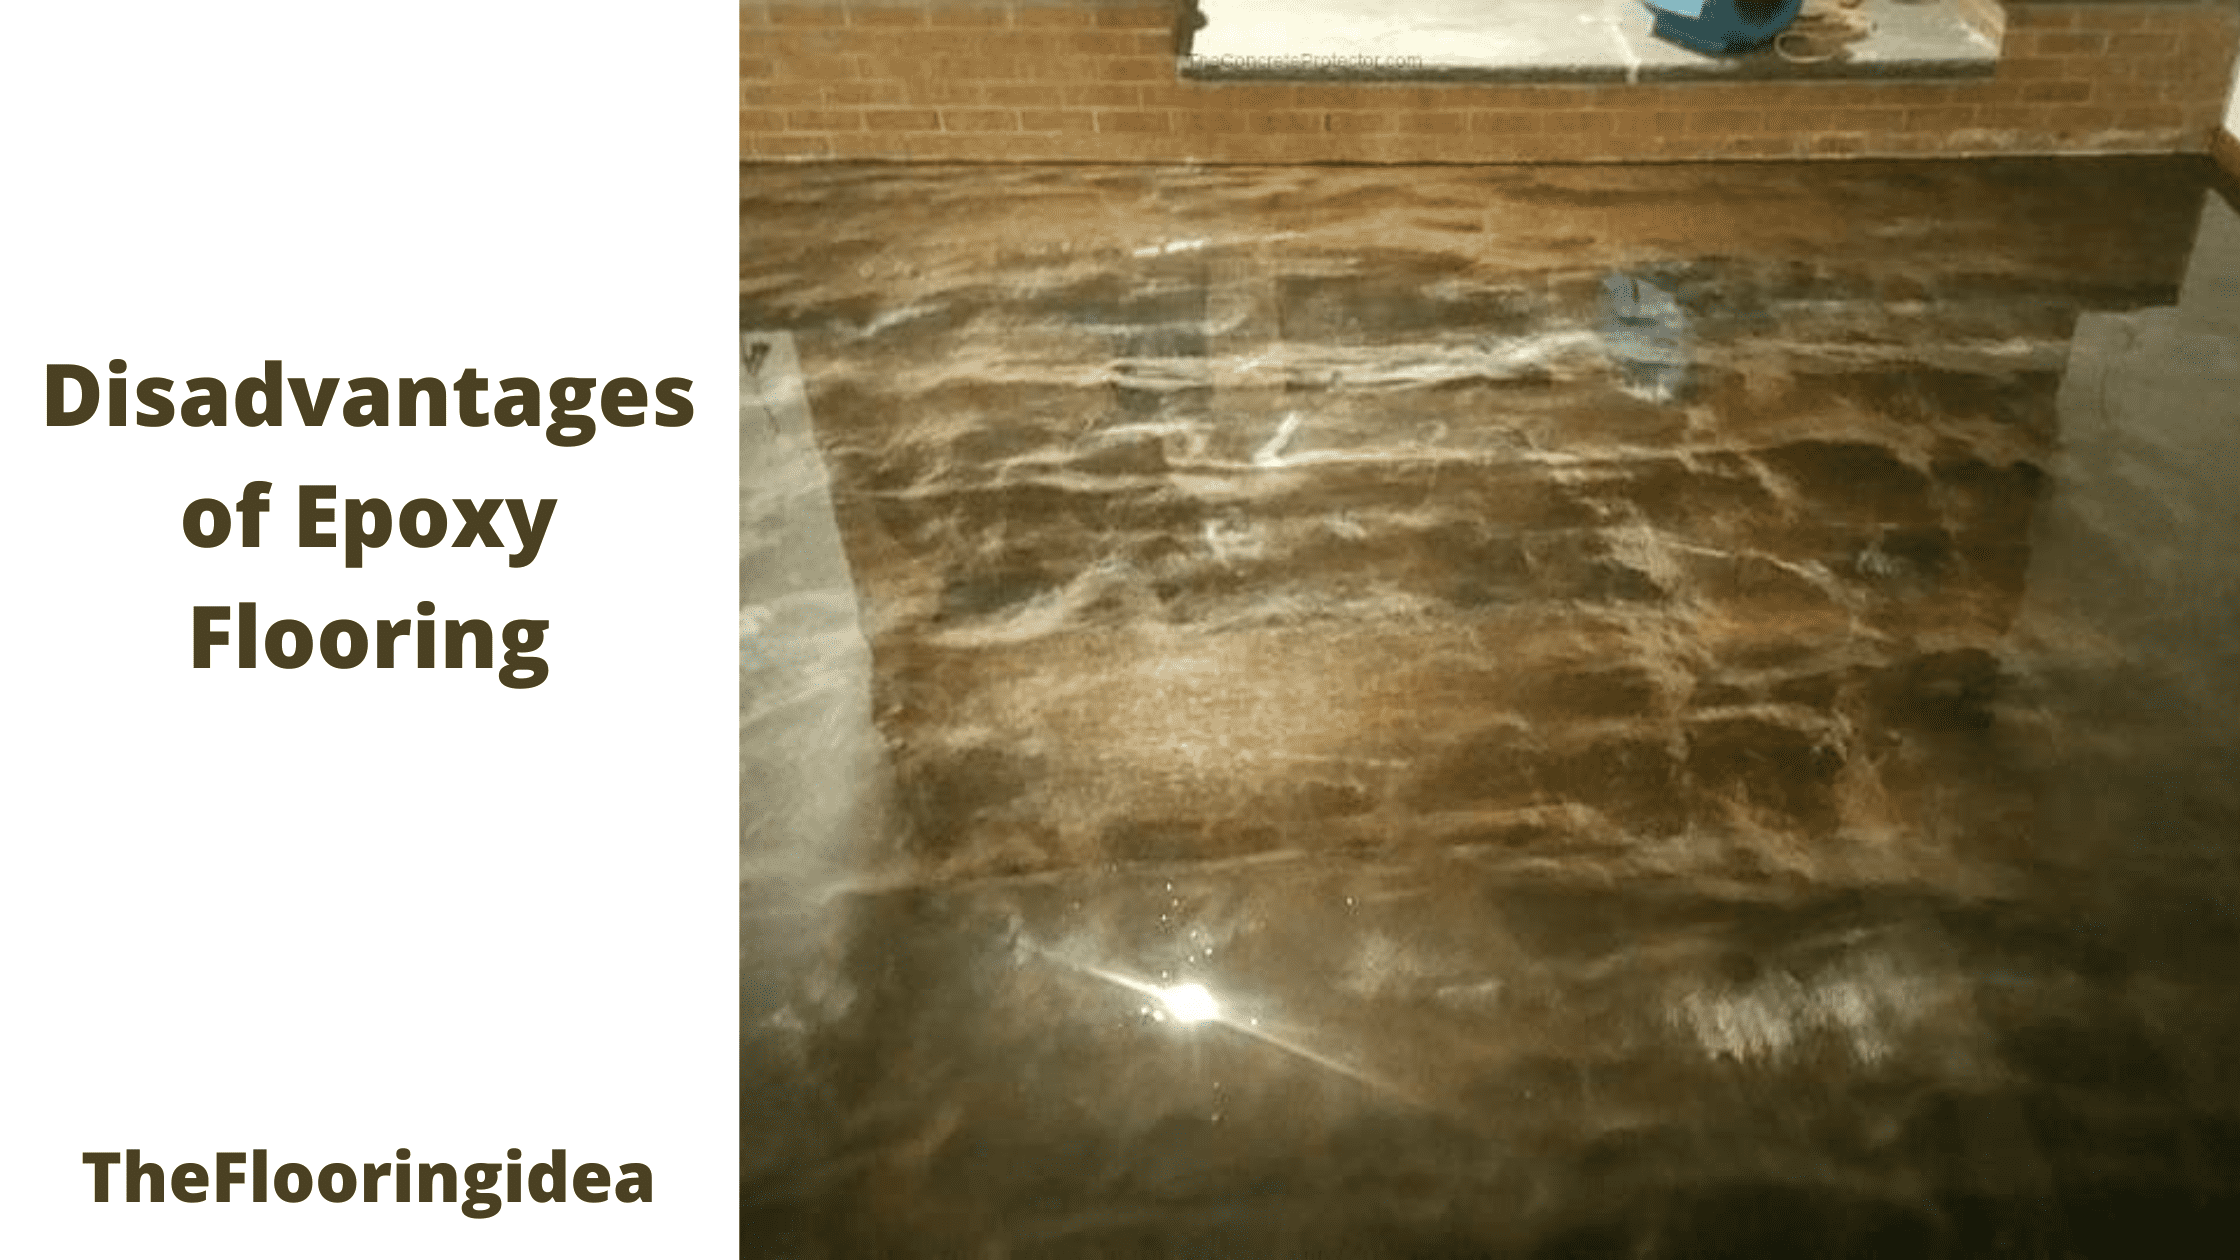 Disadvantages of Epoxy Flooring